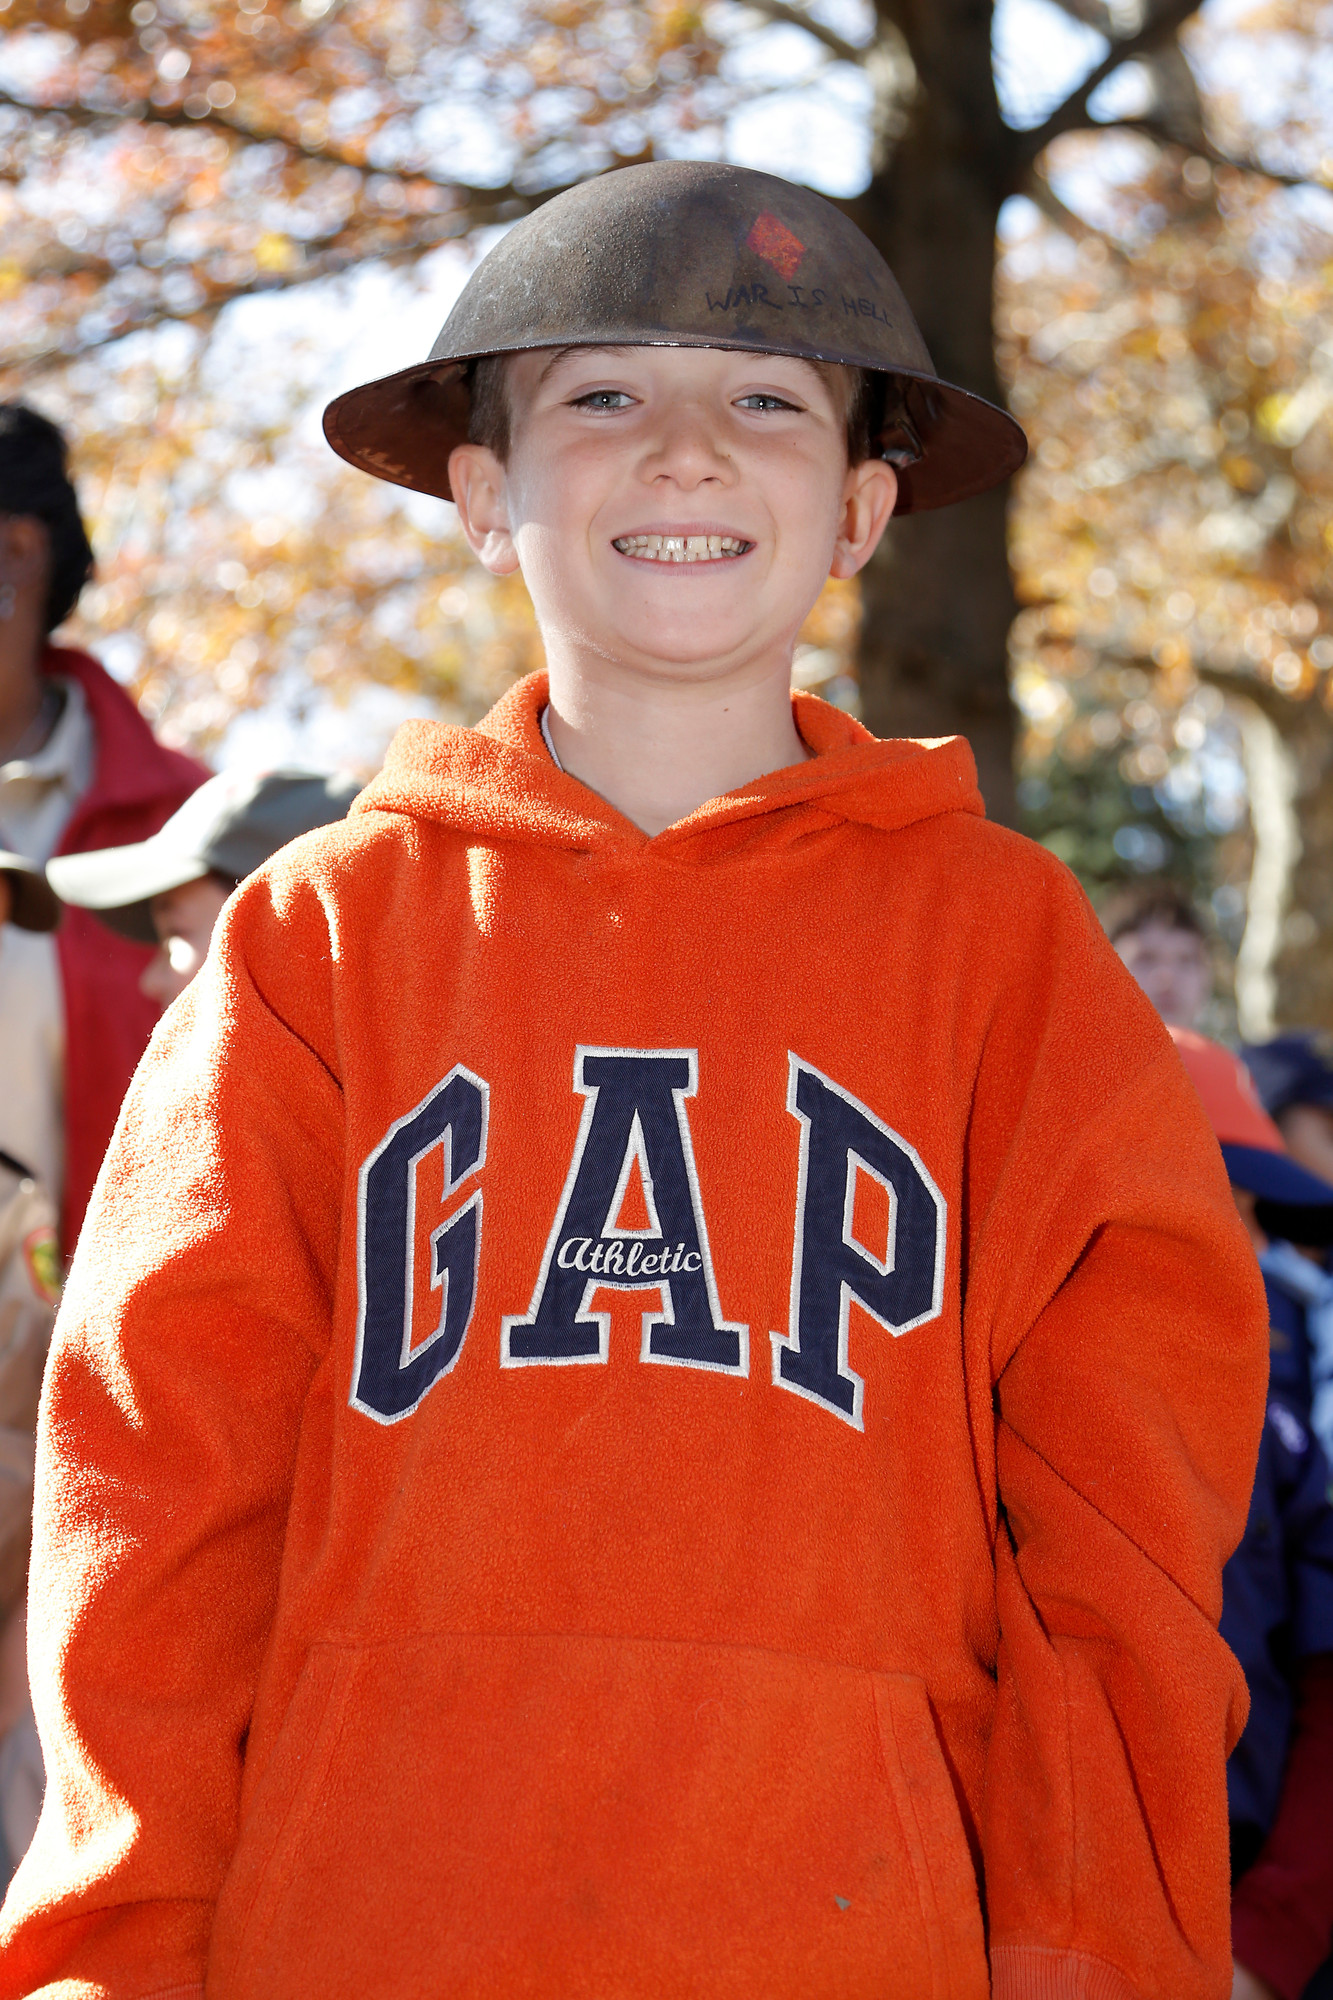 Joseph Kelly, 10, proudly wore his World War I-era British helmet.